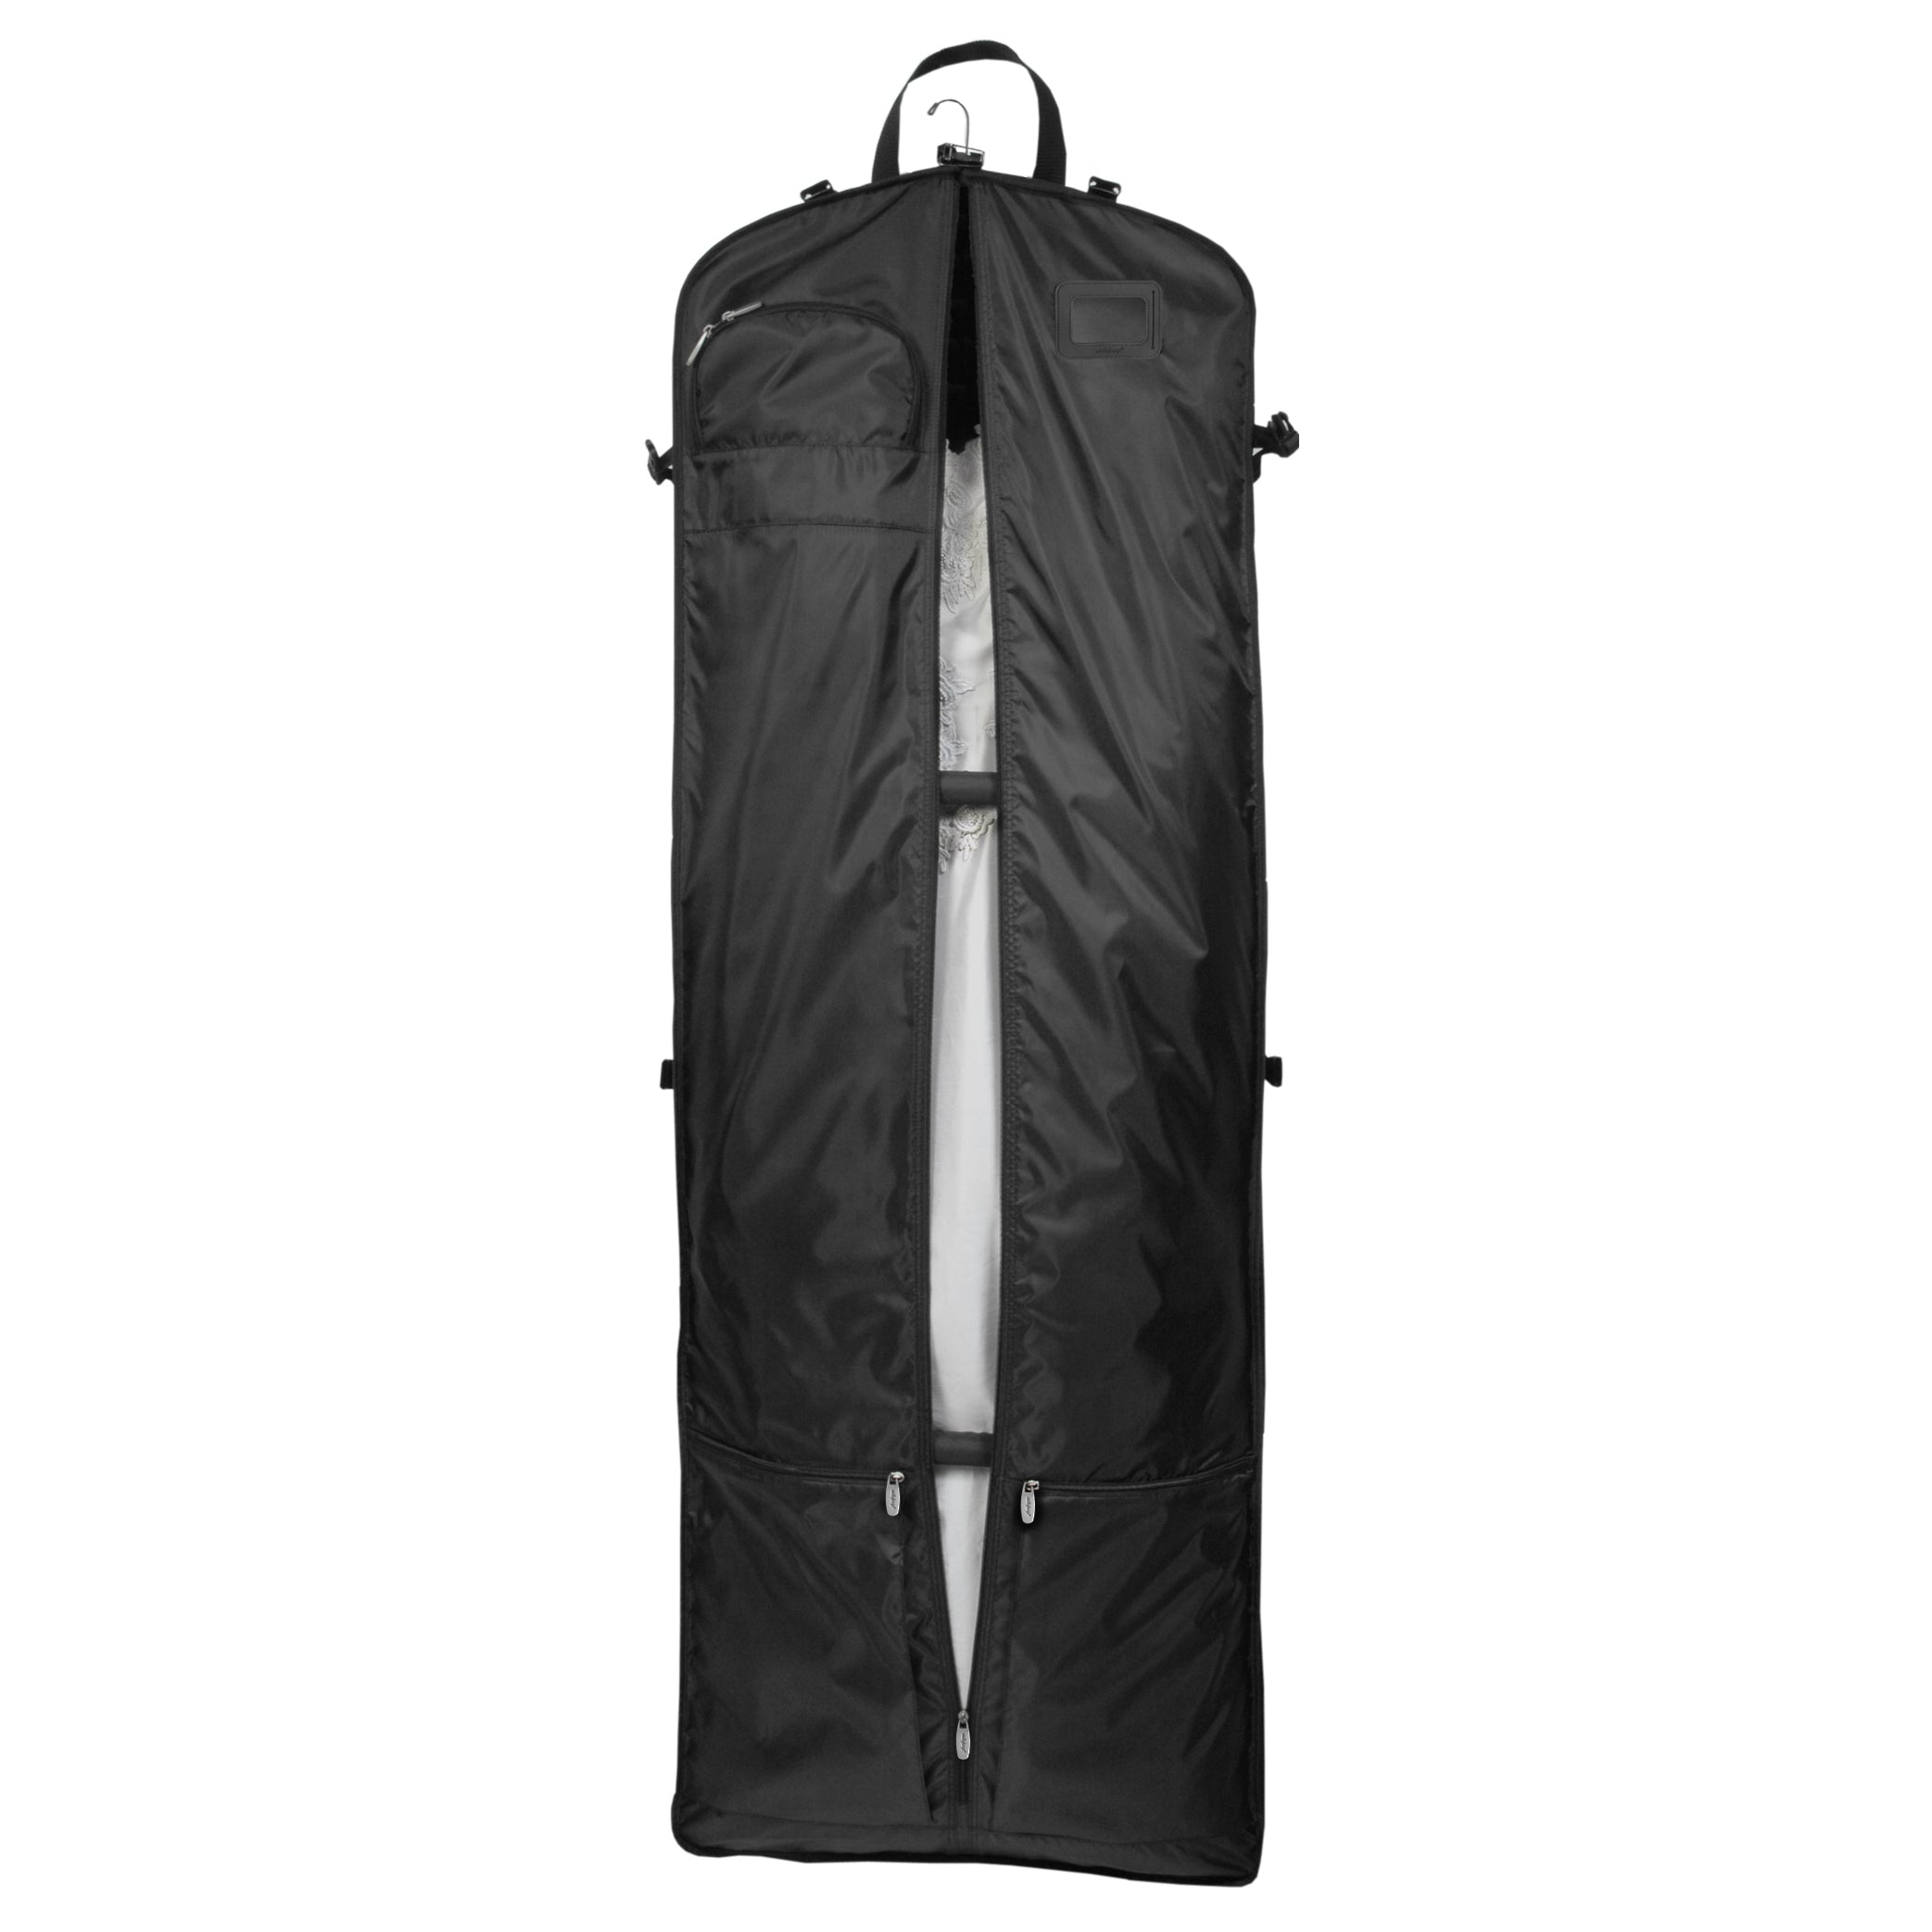 WallyBags  66” Premium Tri-Fold Carry-On Wedding Dress Travel Bag